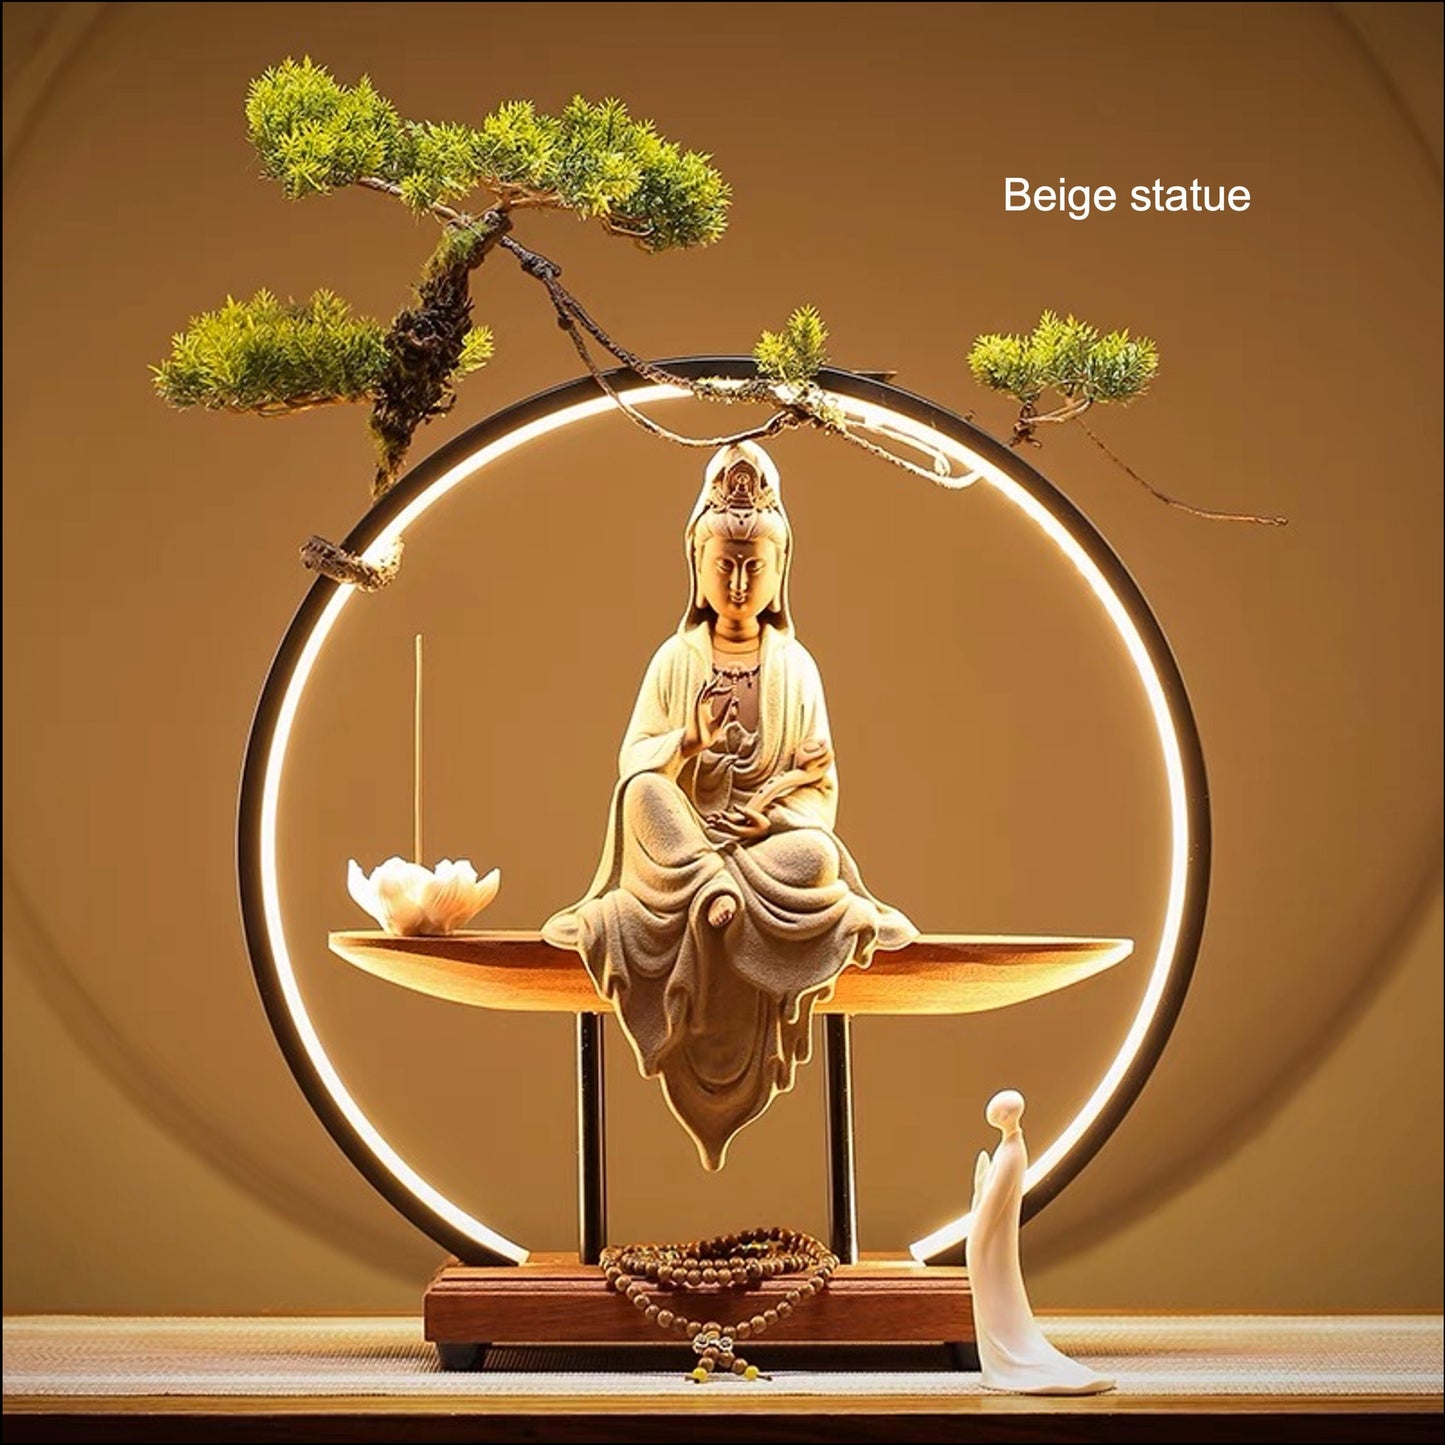 Beige and White Guan Yin Statue Decorative Set with LED light | Buddha Statue | Kuan Yin Quan Yin | Meditation | Home Decoration | Incense